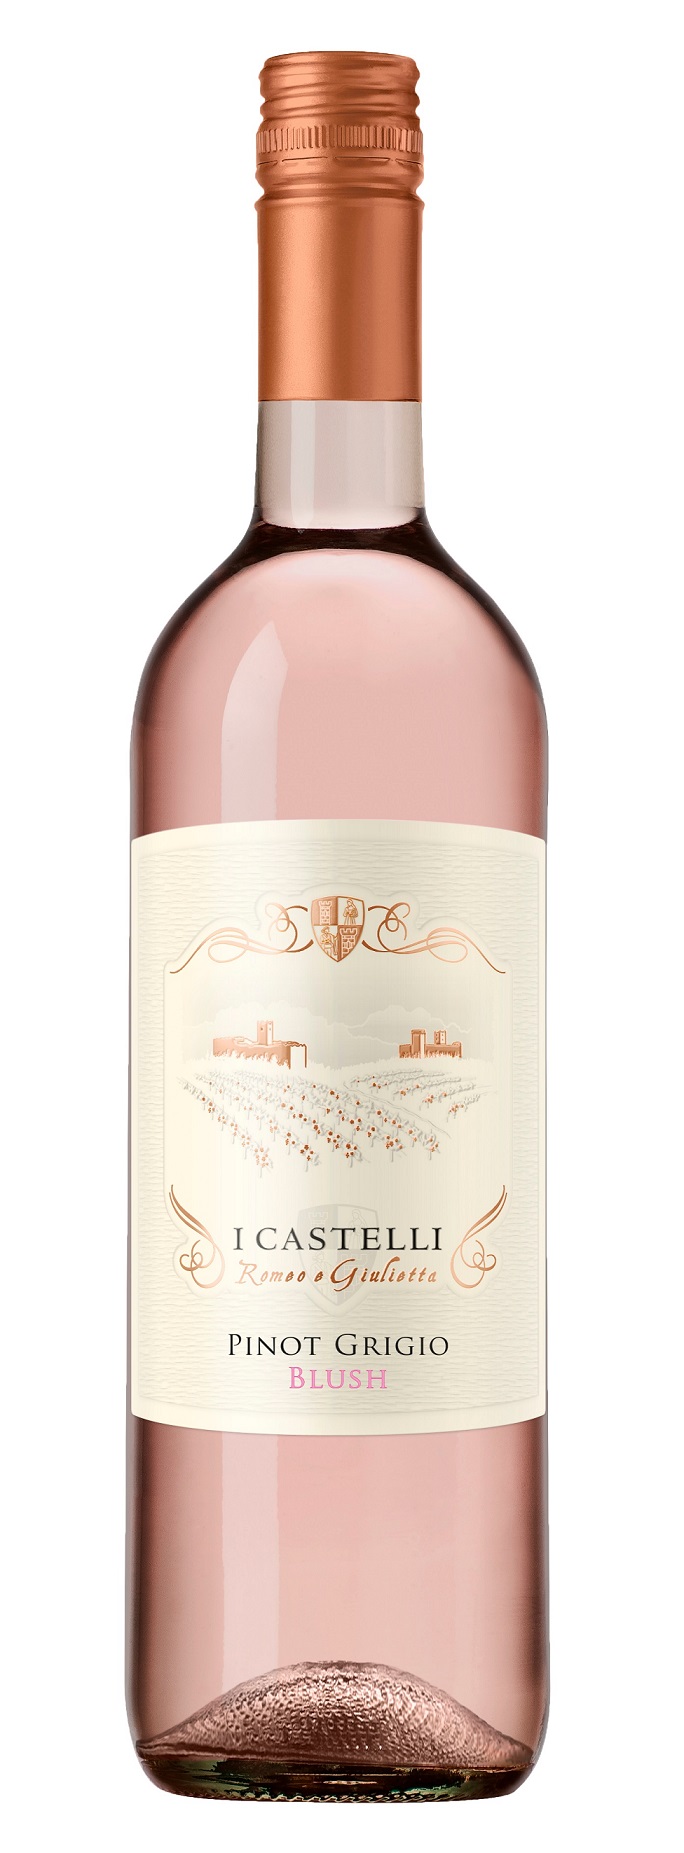 I Castelli Pinot Grigio Blush